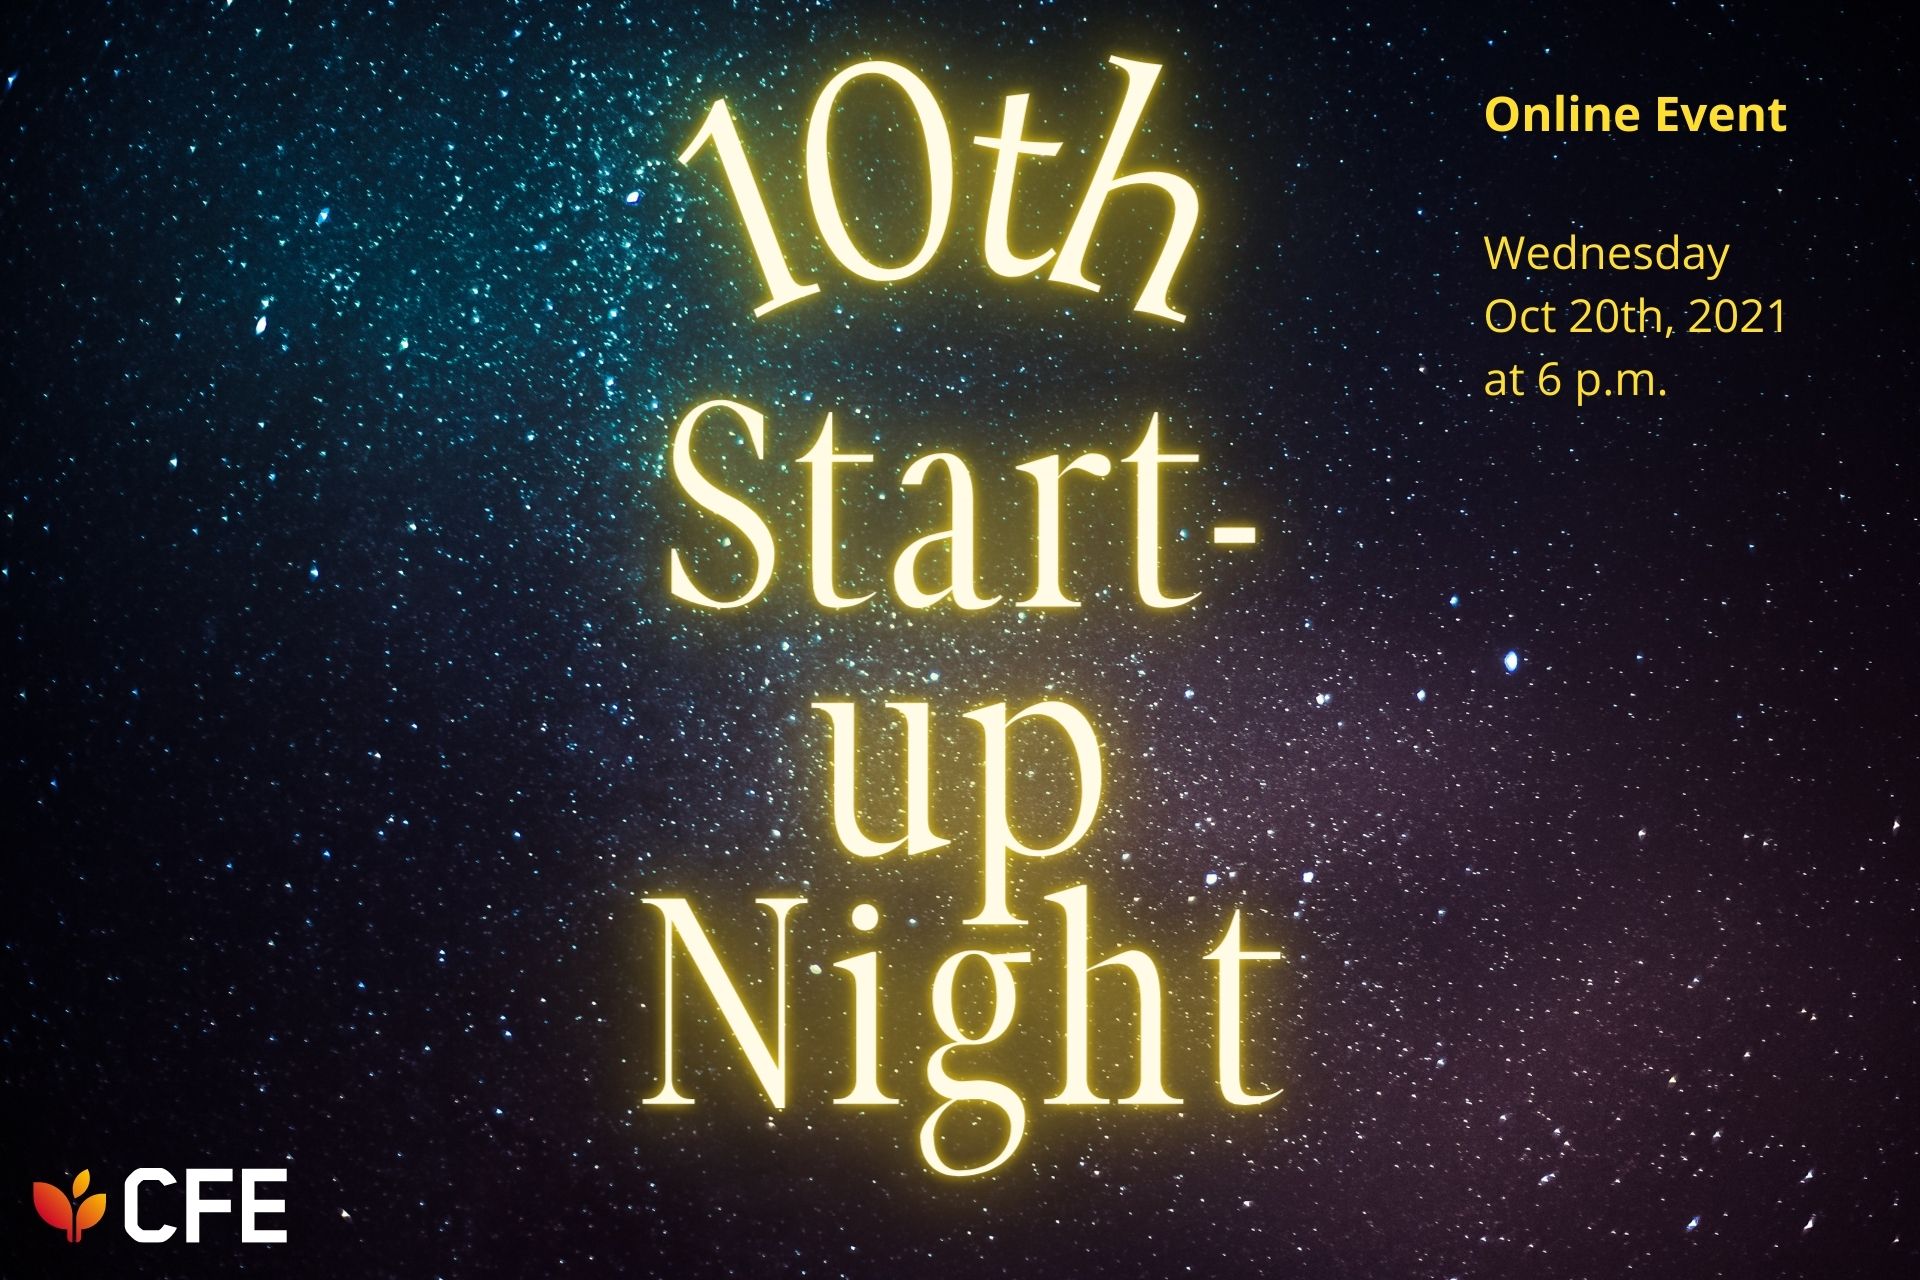 Start-up Night Event